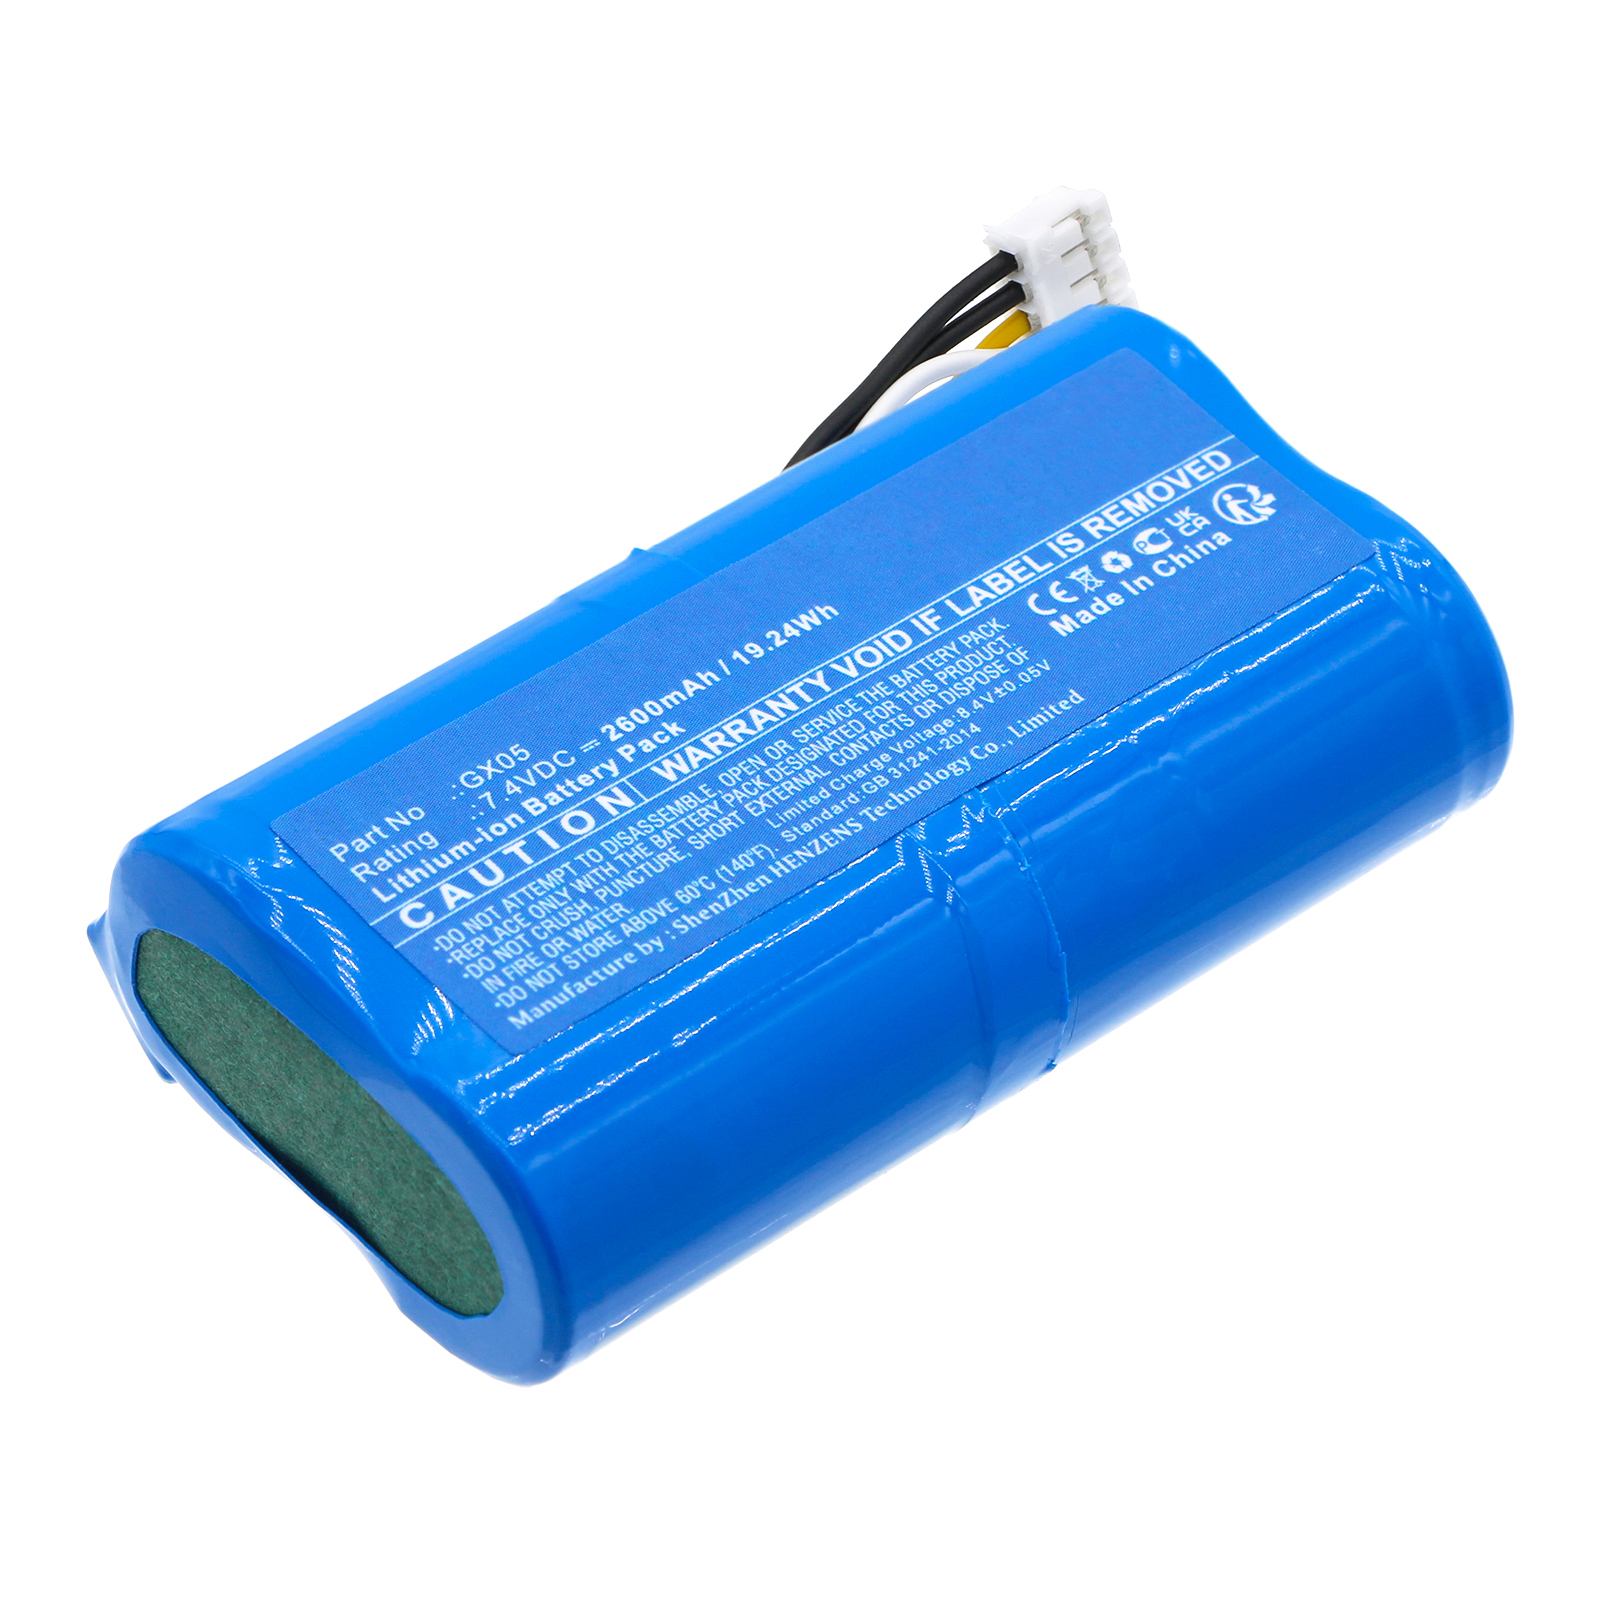 Batteries for WizarposCredit Card Reader